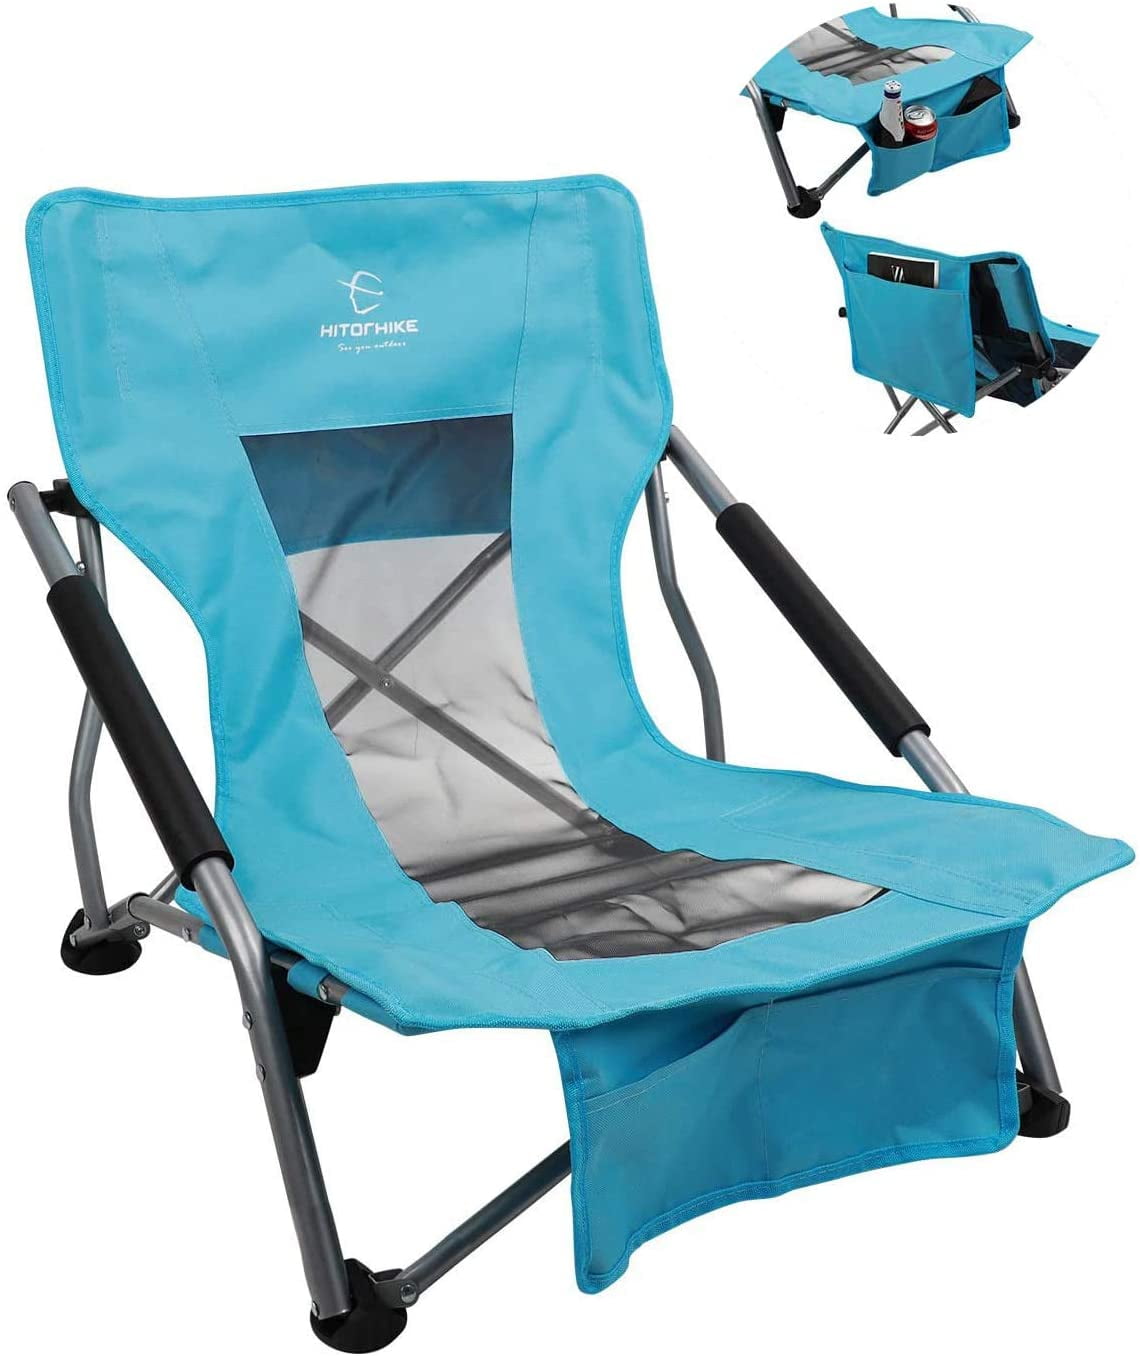 VINGLI Oversized Fishing Chair Heavy Duty 440 LBS w/ 0-160° Adjustable Back